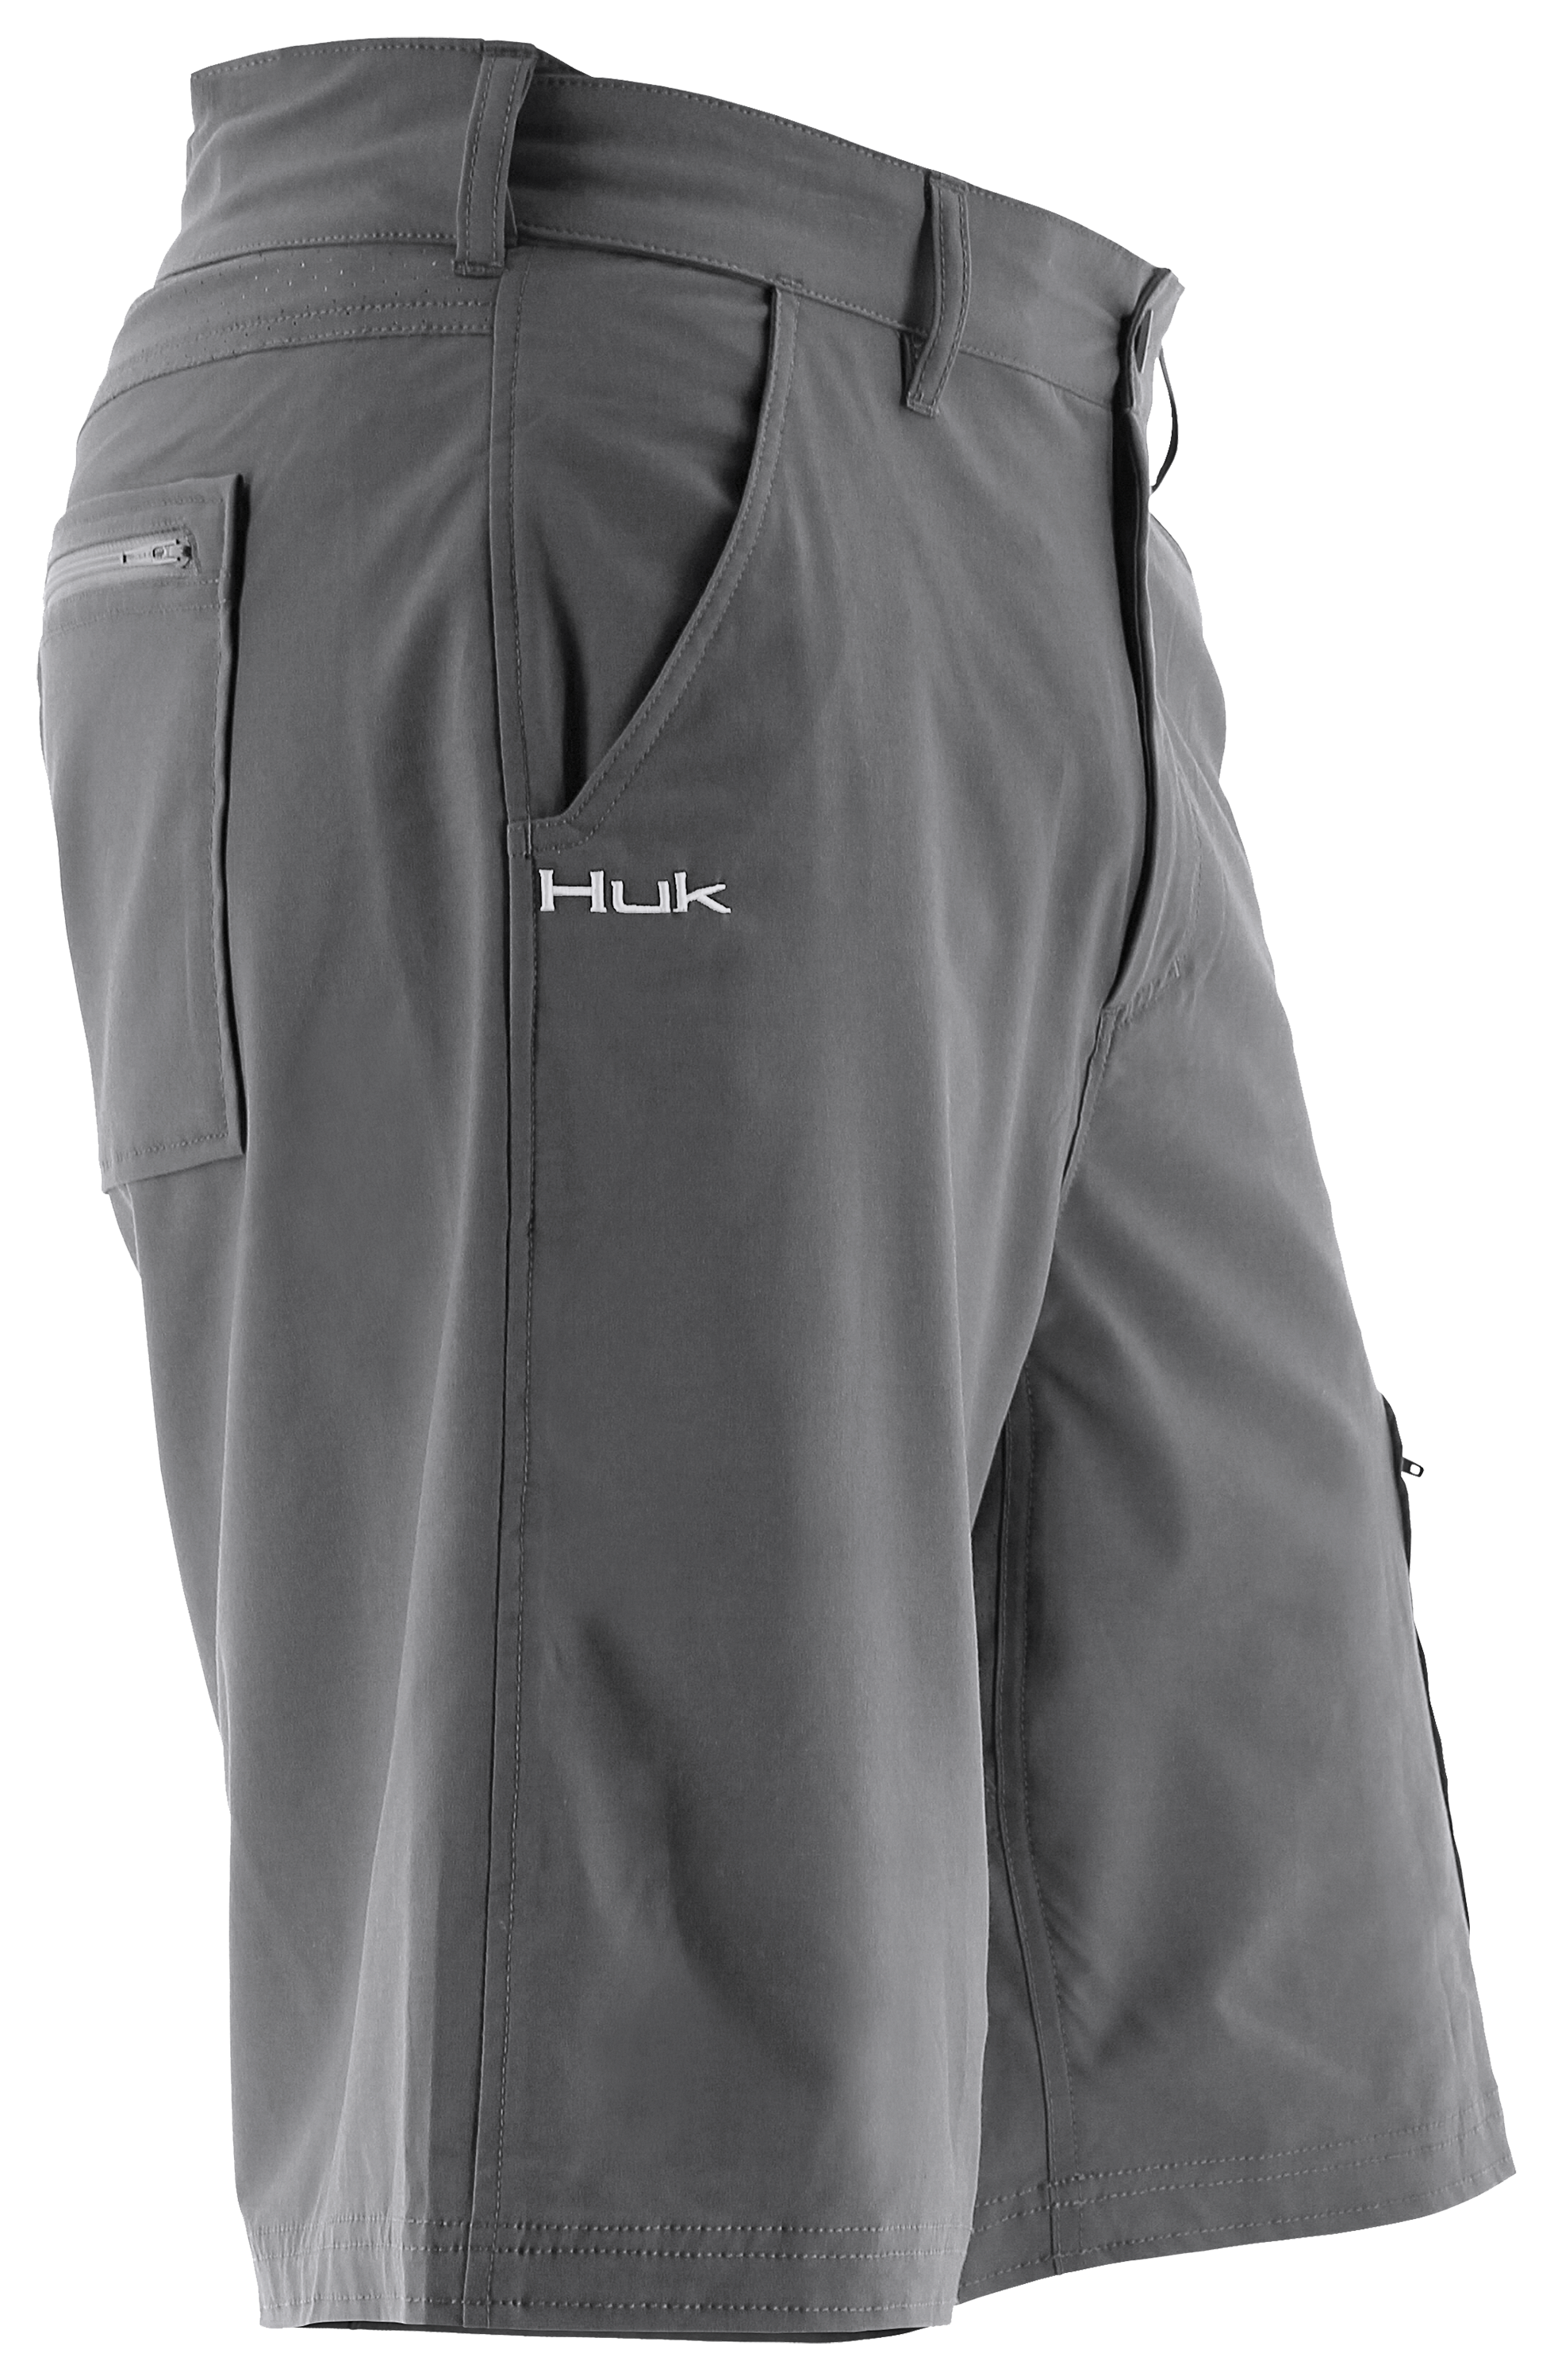  Huk Men's Tournament Wind Water Proof Fishing Bib, Black,  X-Large : Clothing, Shoes & Jewelry